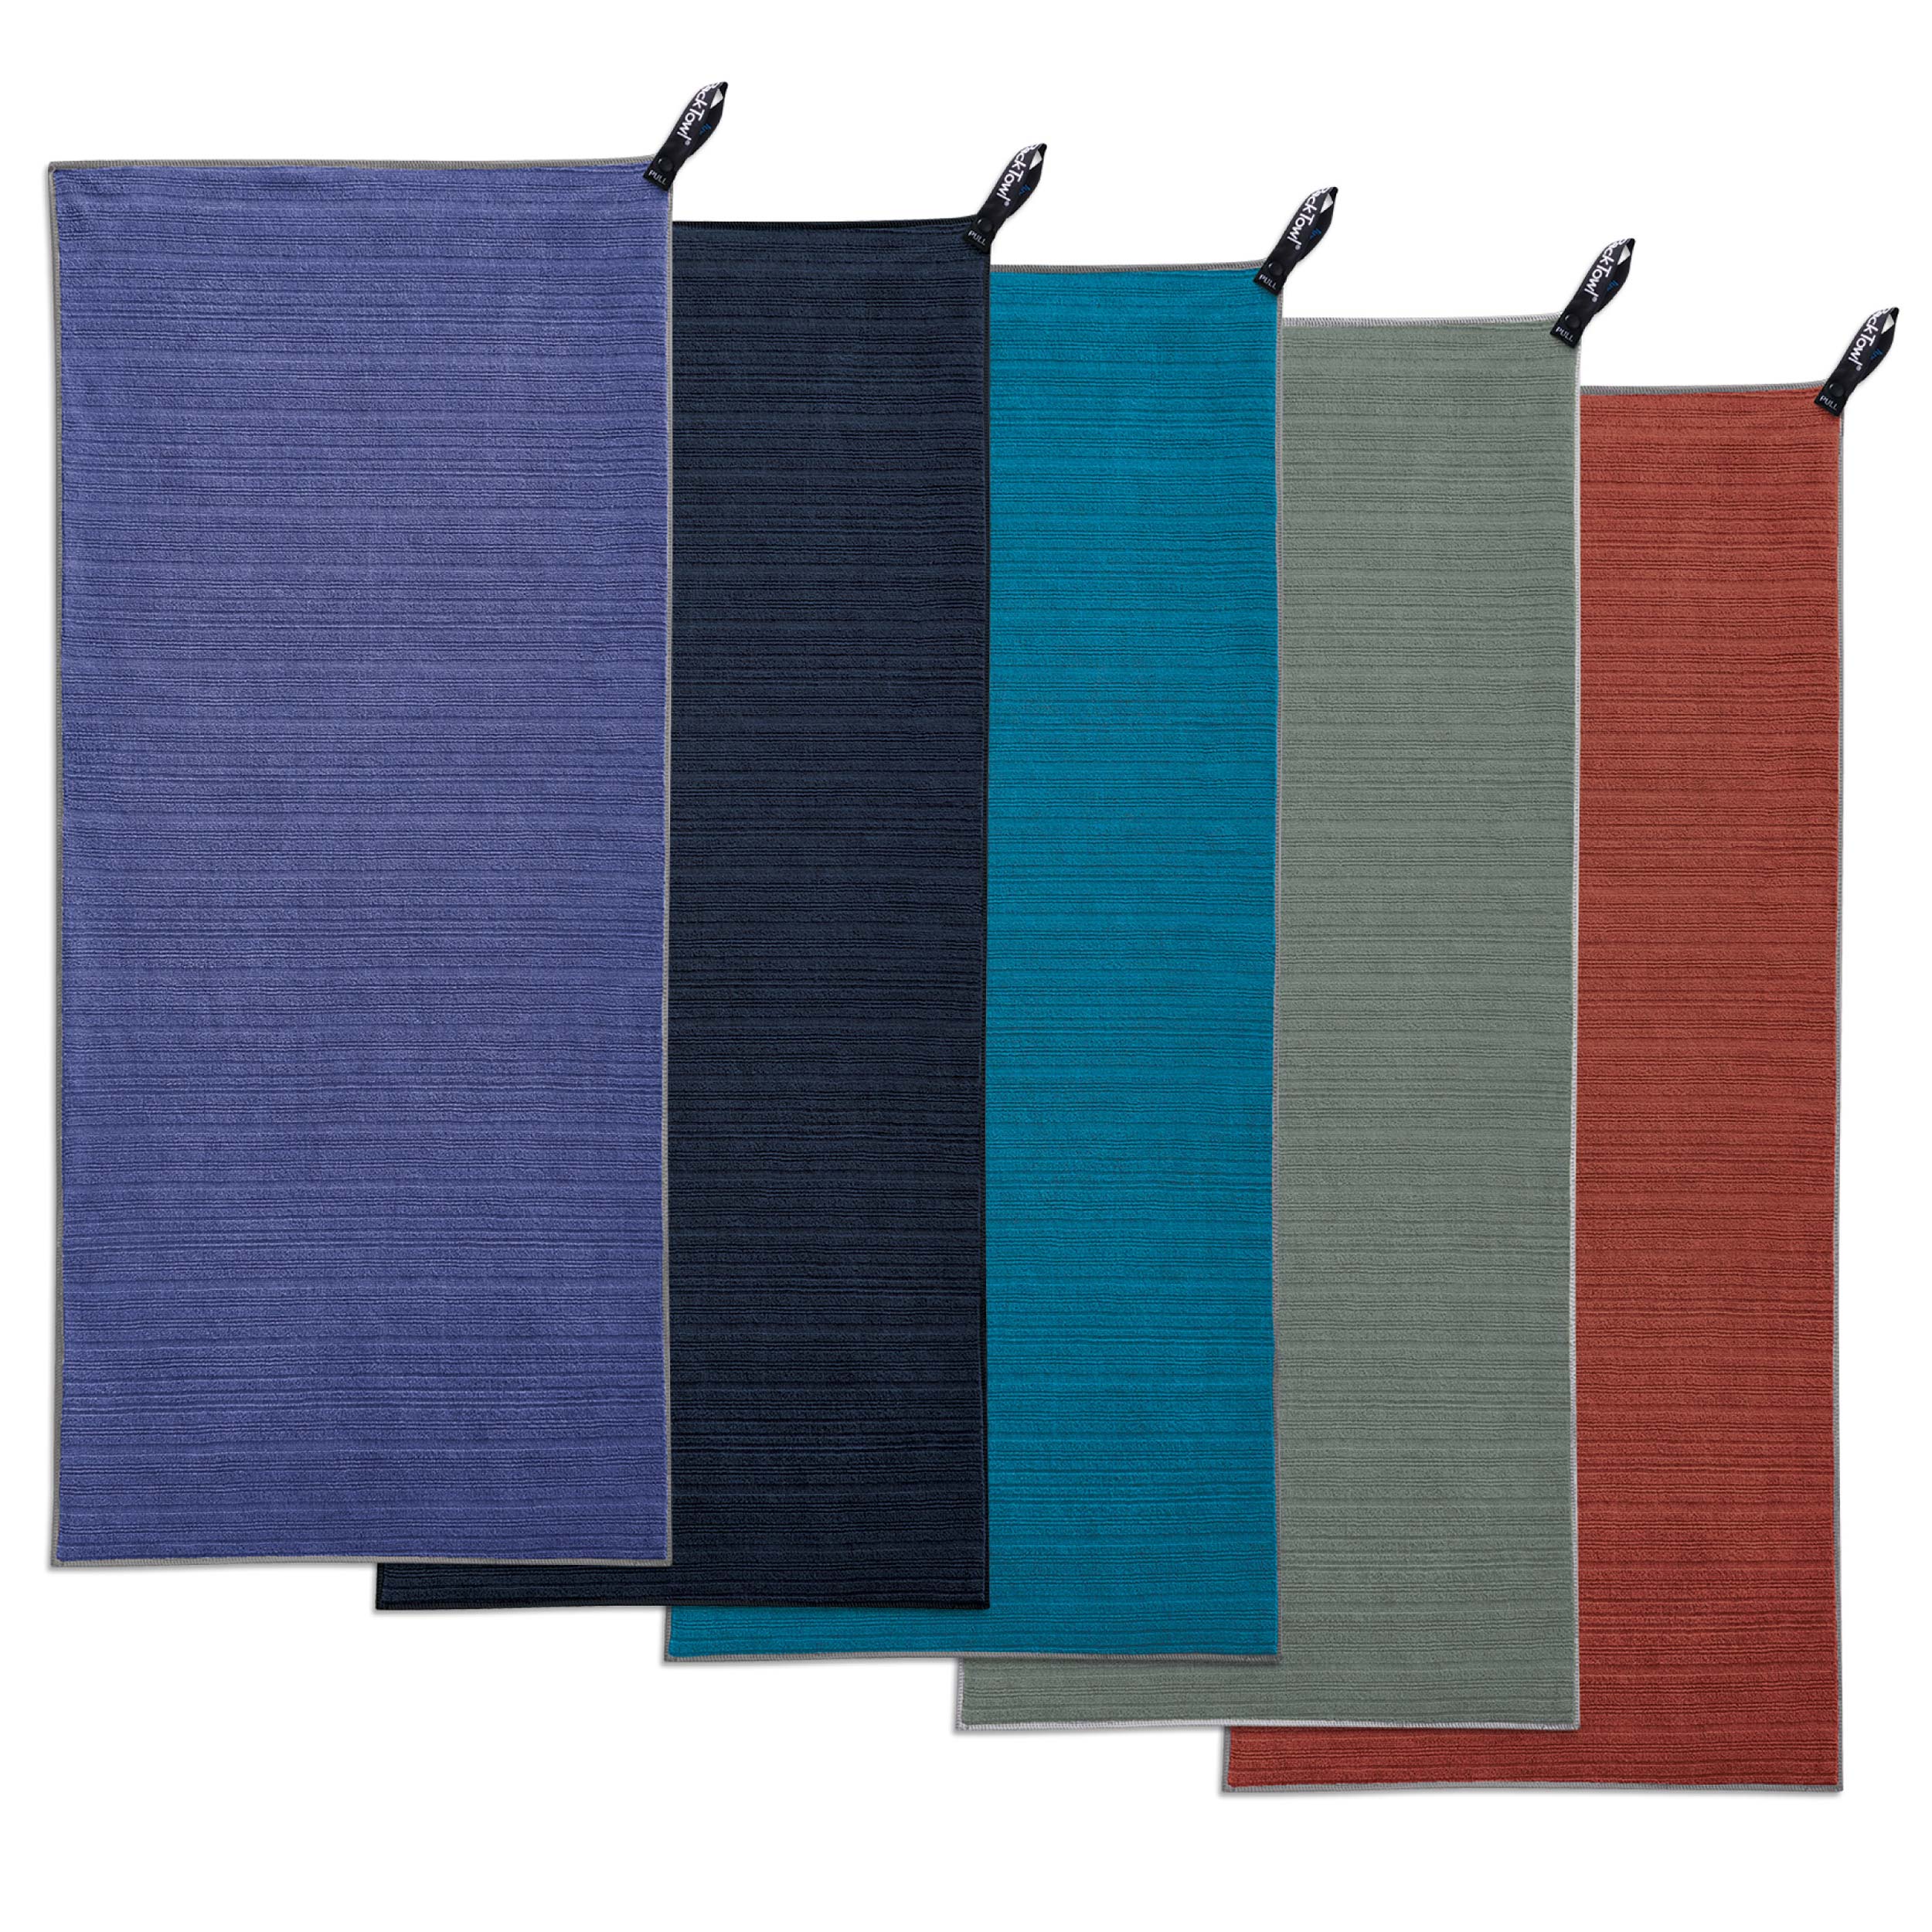 Luxe PackTowl | Soft, Microfiber Towel | Absorbent, PackTowl®